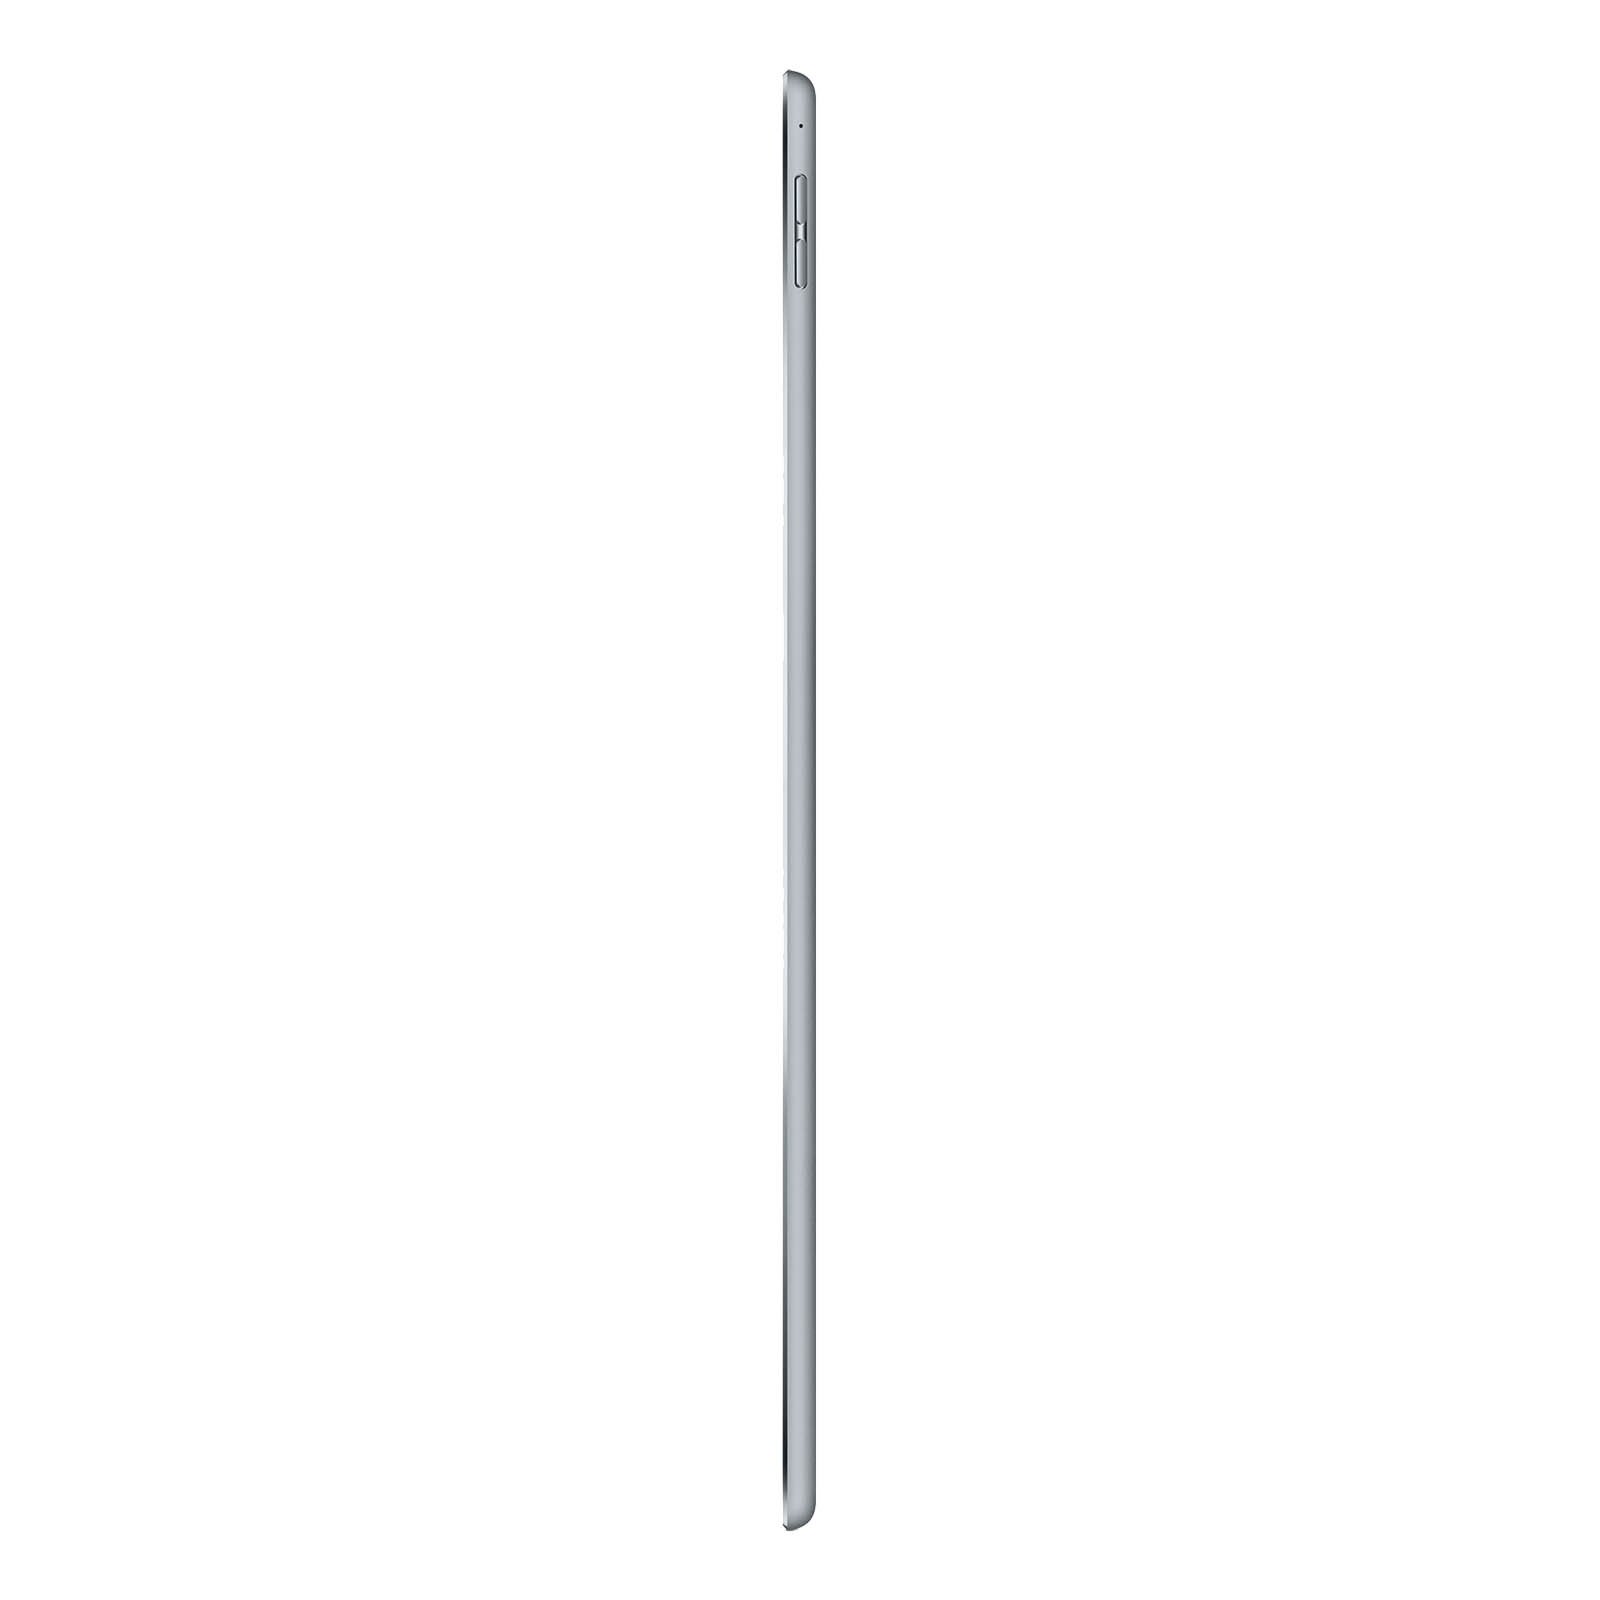 iPad Pro 12.9 Inch 2nd Gen 512GB Space Grey Pristine - Unlocked